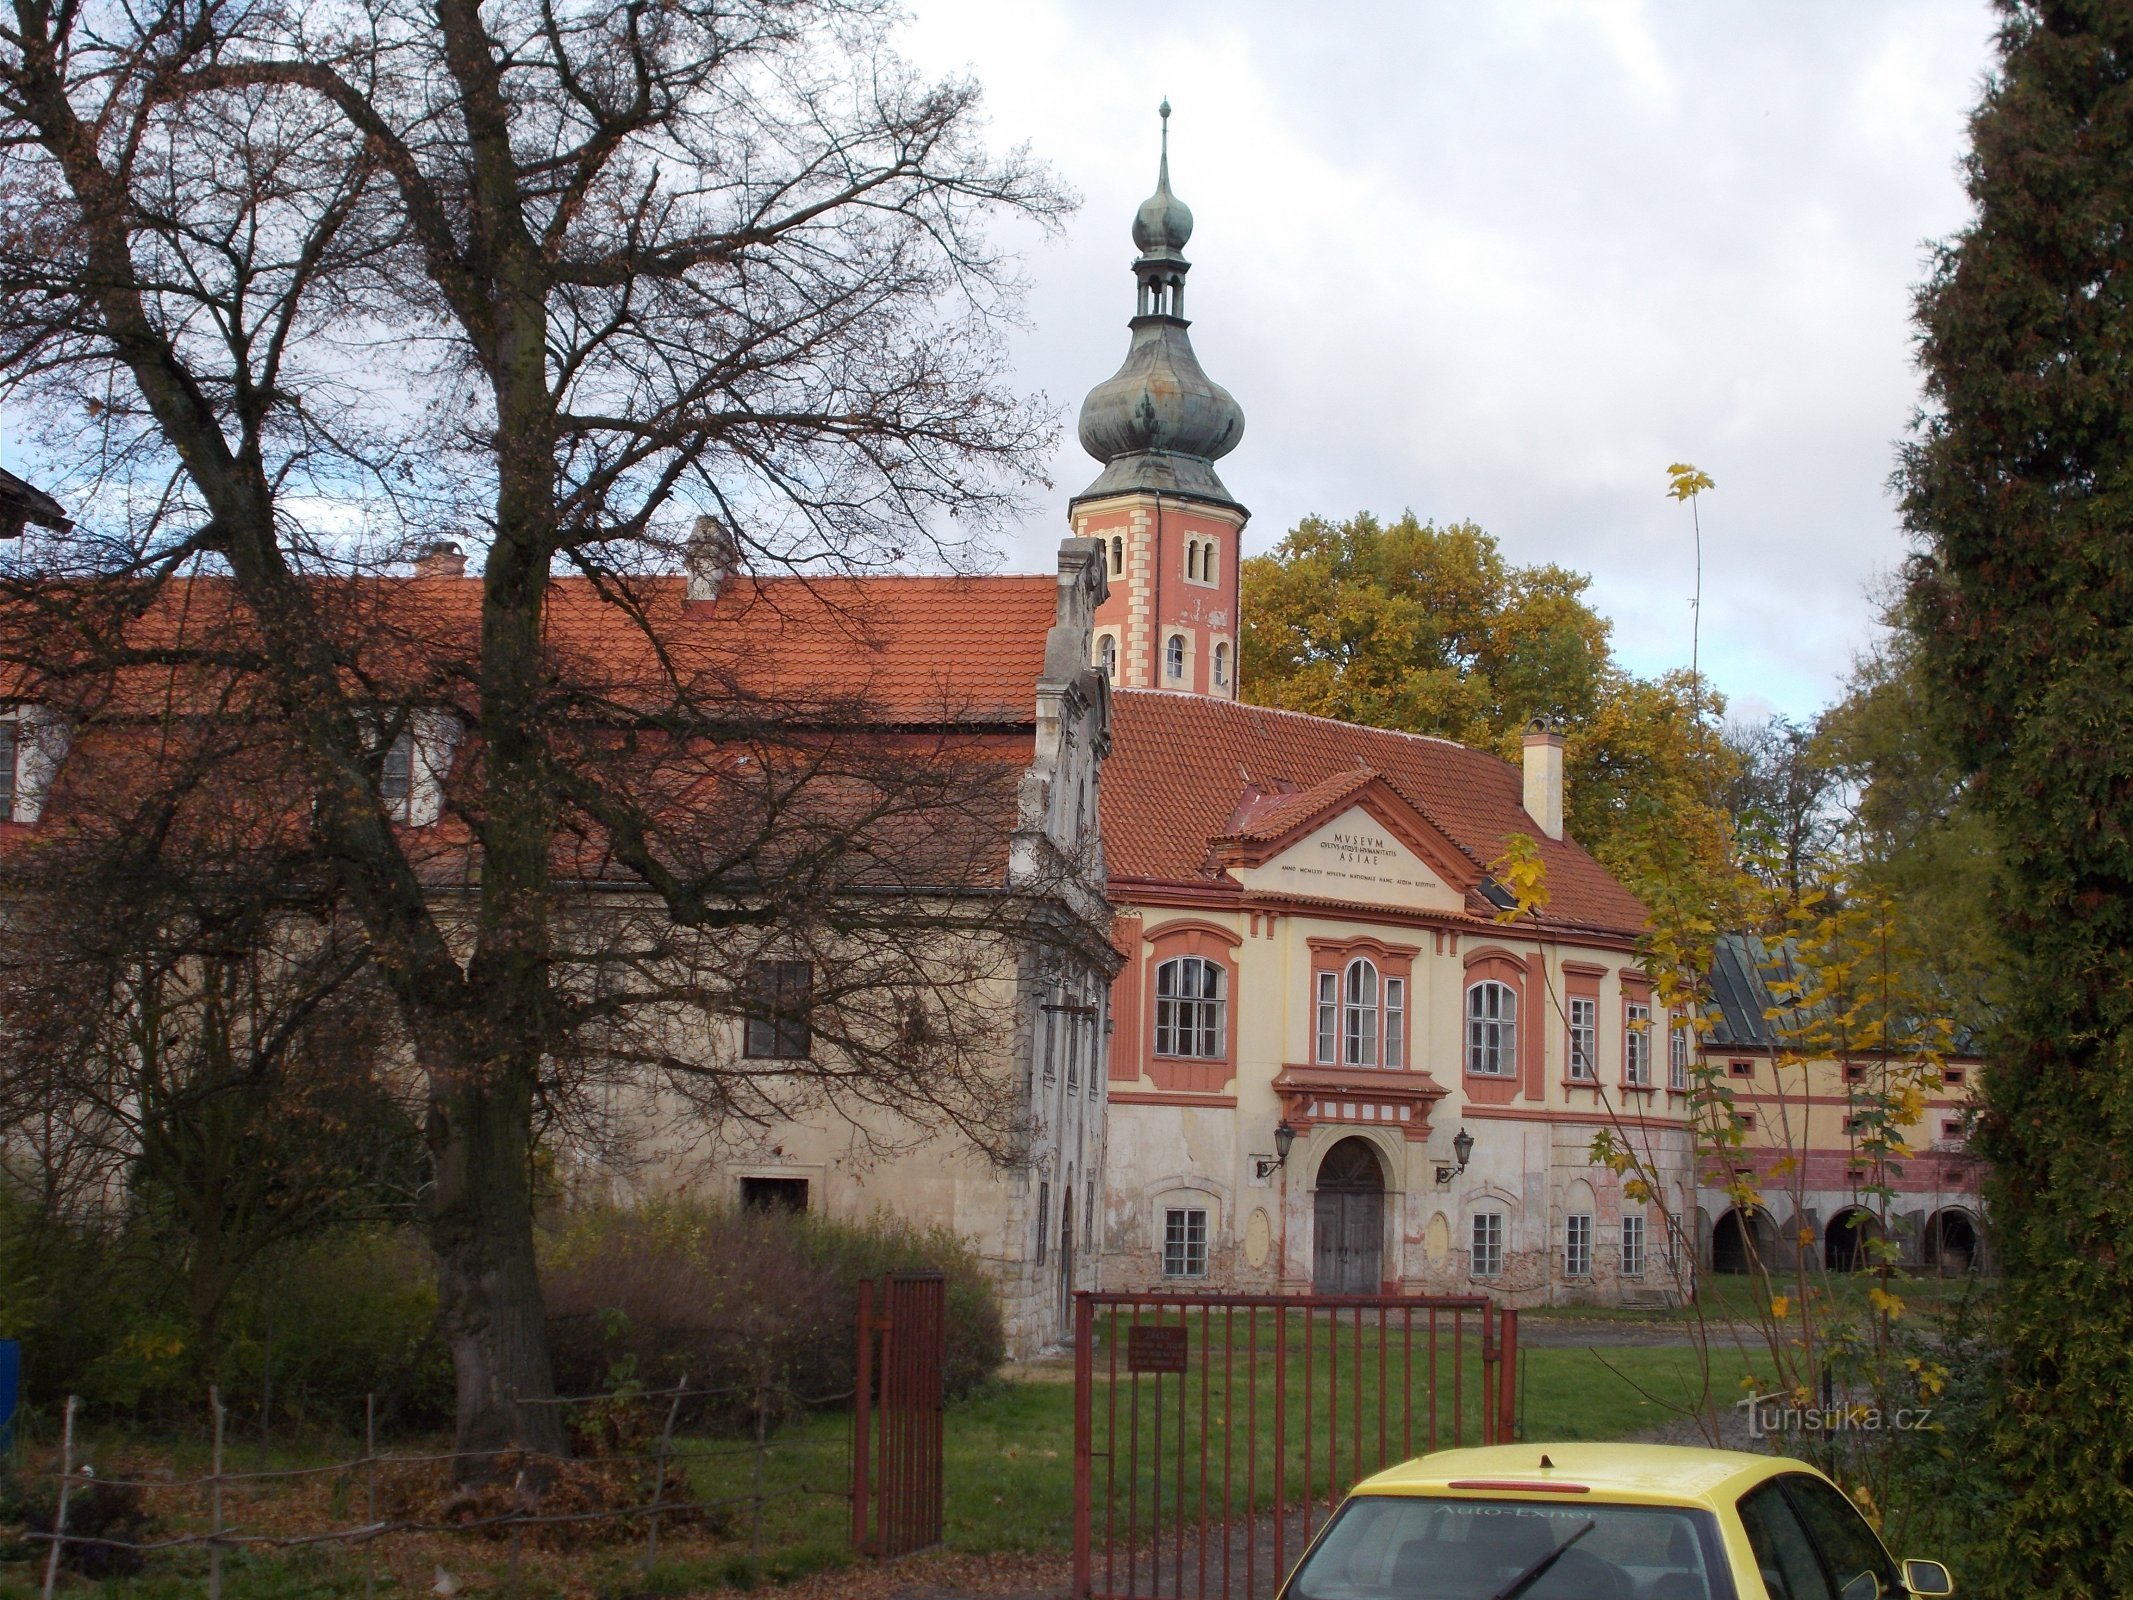 Castillo de Libchov